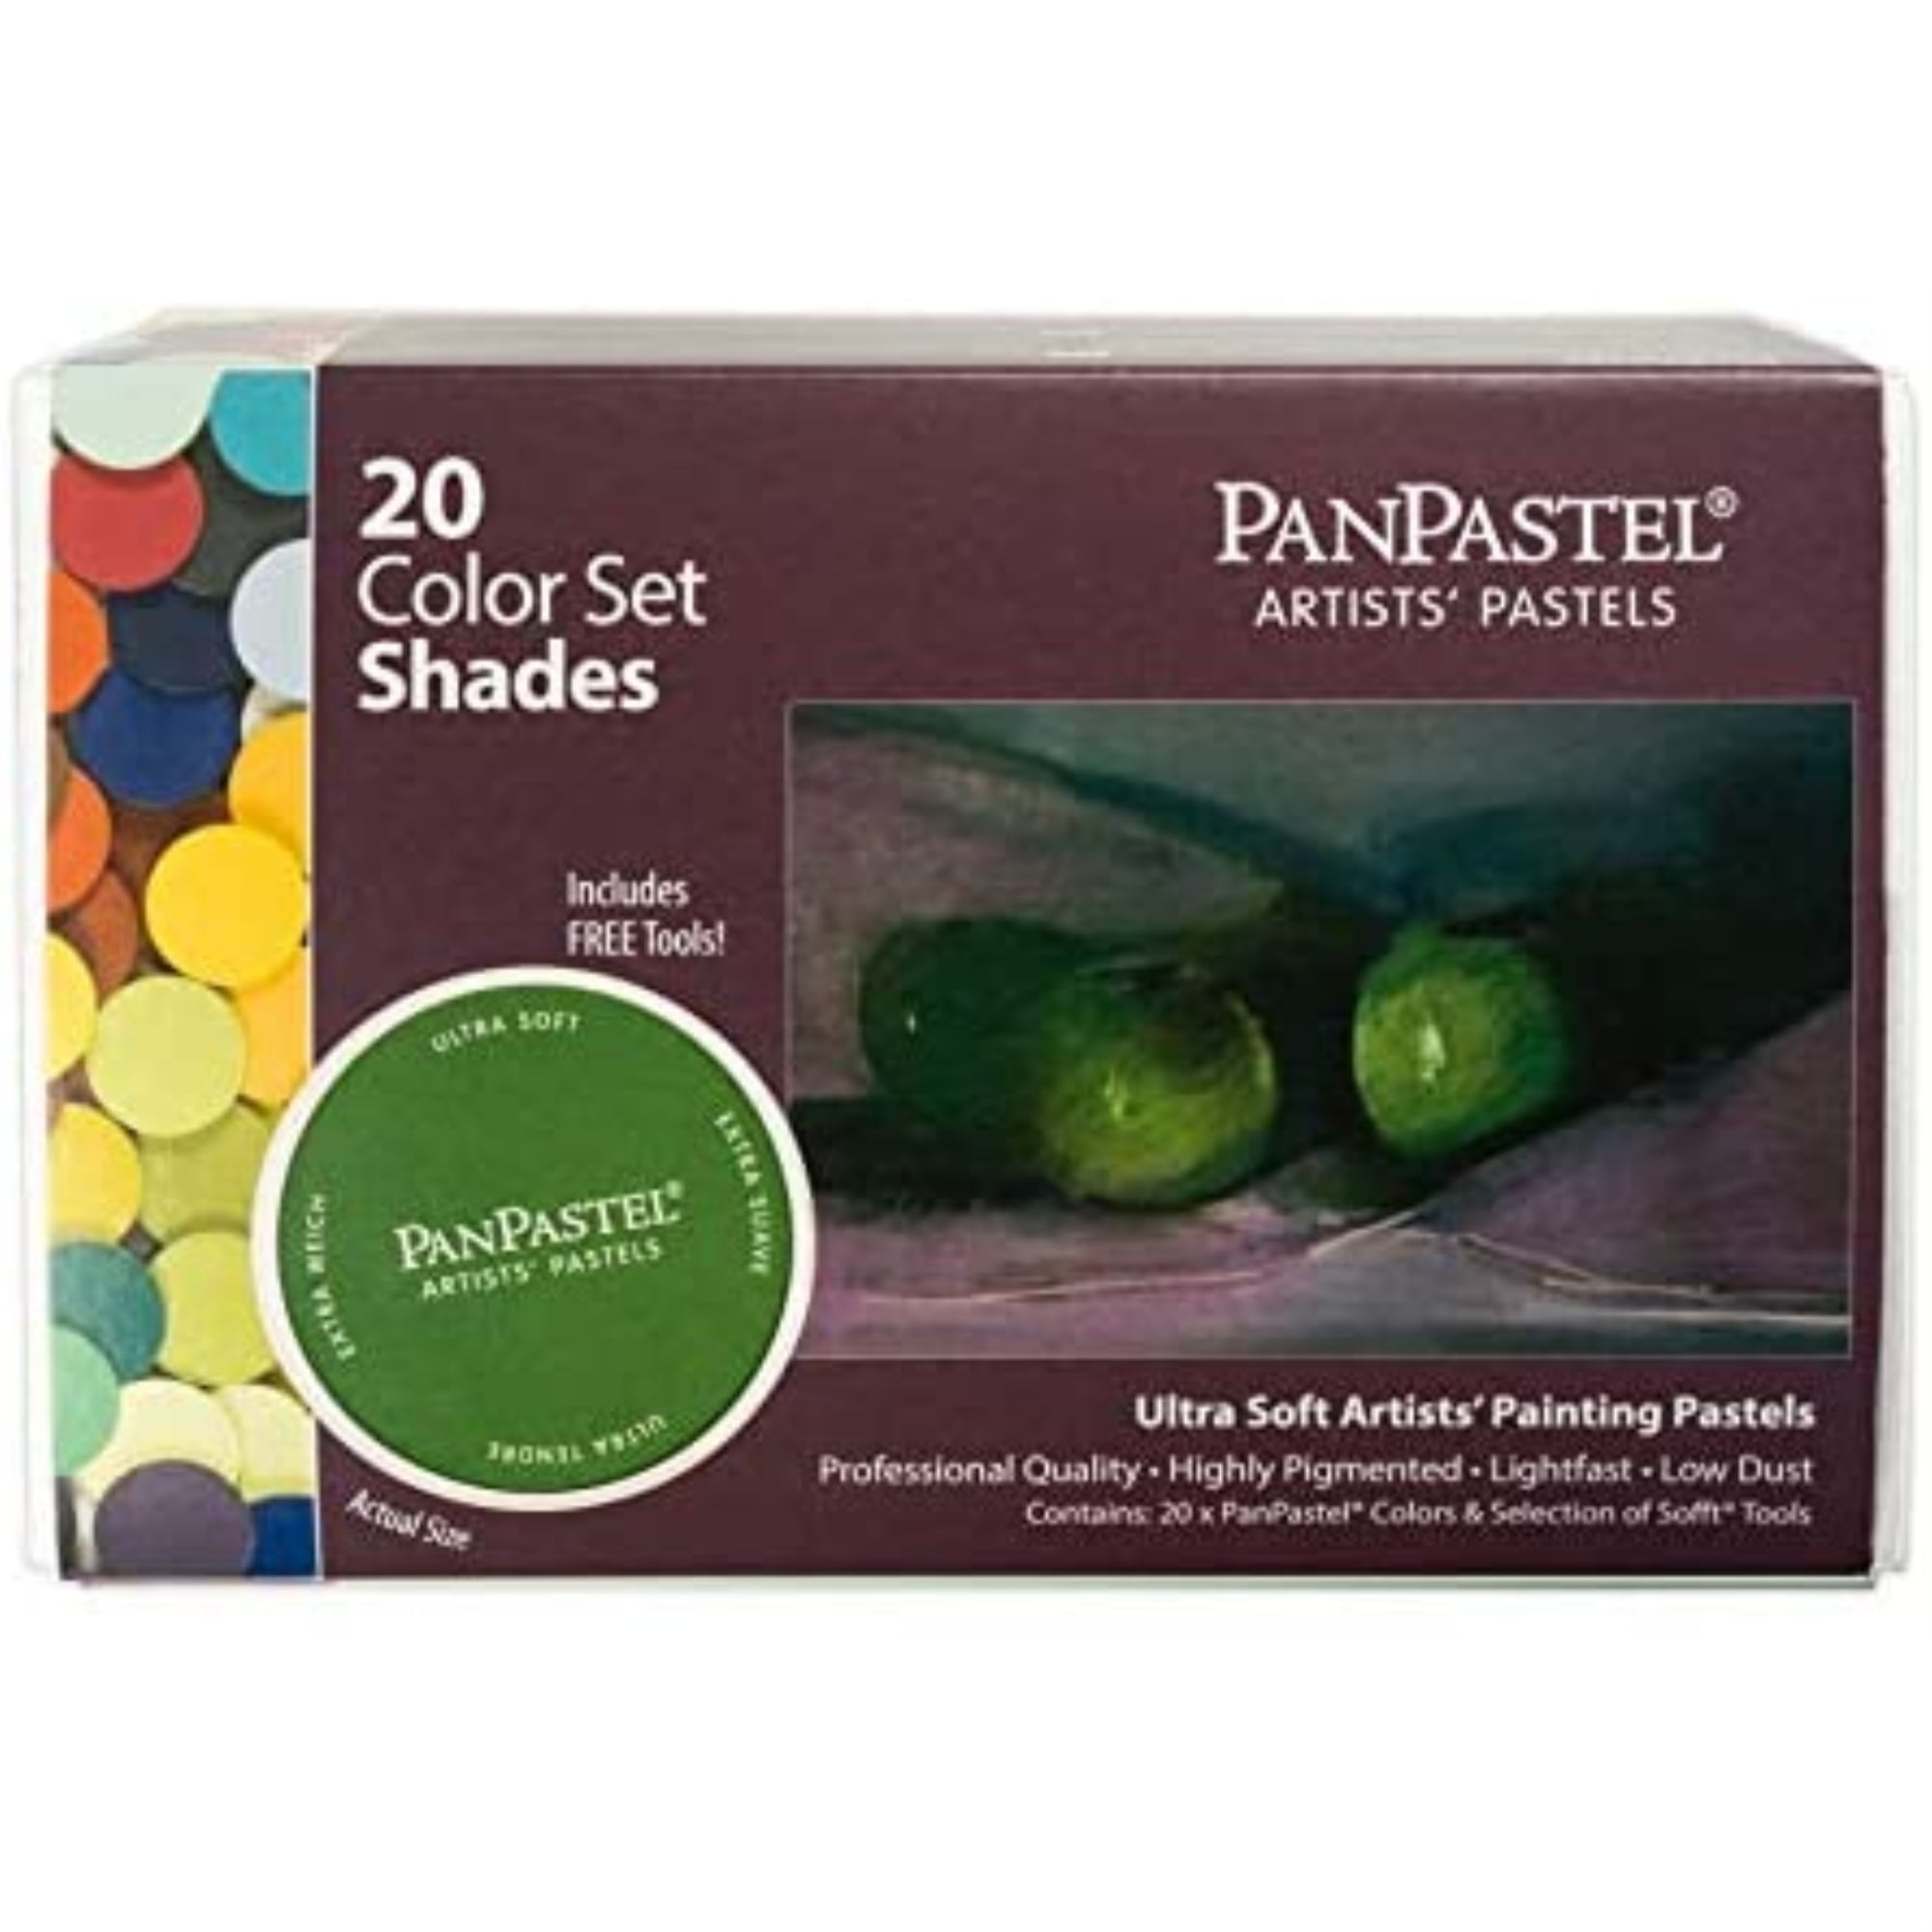 PanPastel Artists' Pastels 